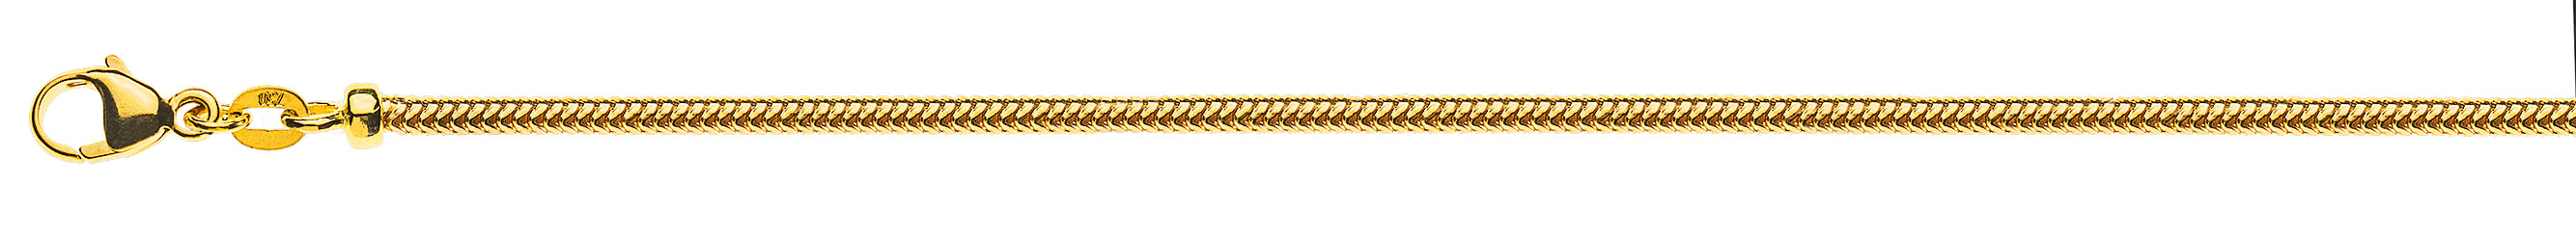 AURONOS Prestige Necklace yellow gold 18K snake chain 45cm 2.4mm